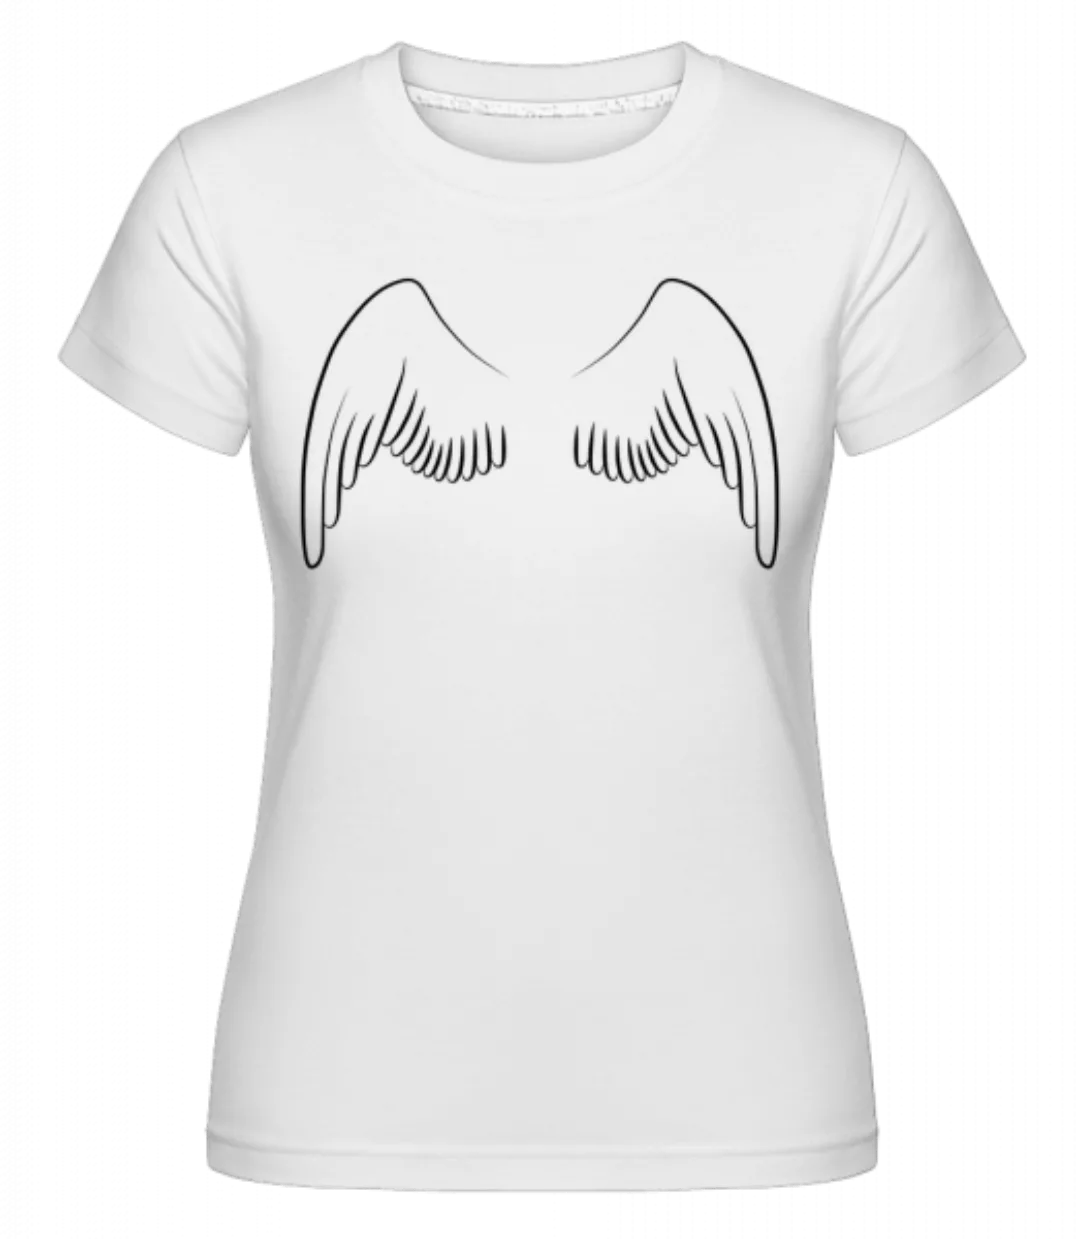 Engel Flügel · Shirtinator Frauen T-Shirt günstig online kaufen